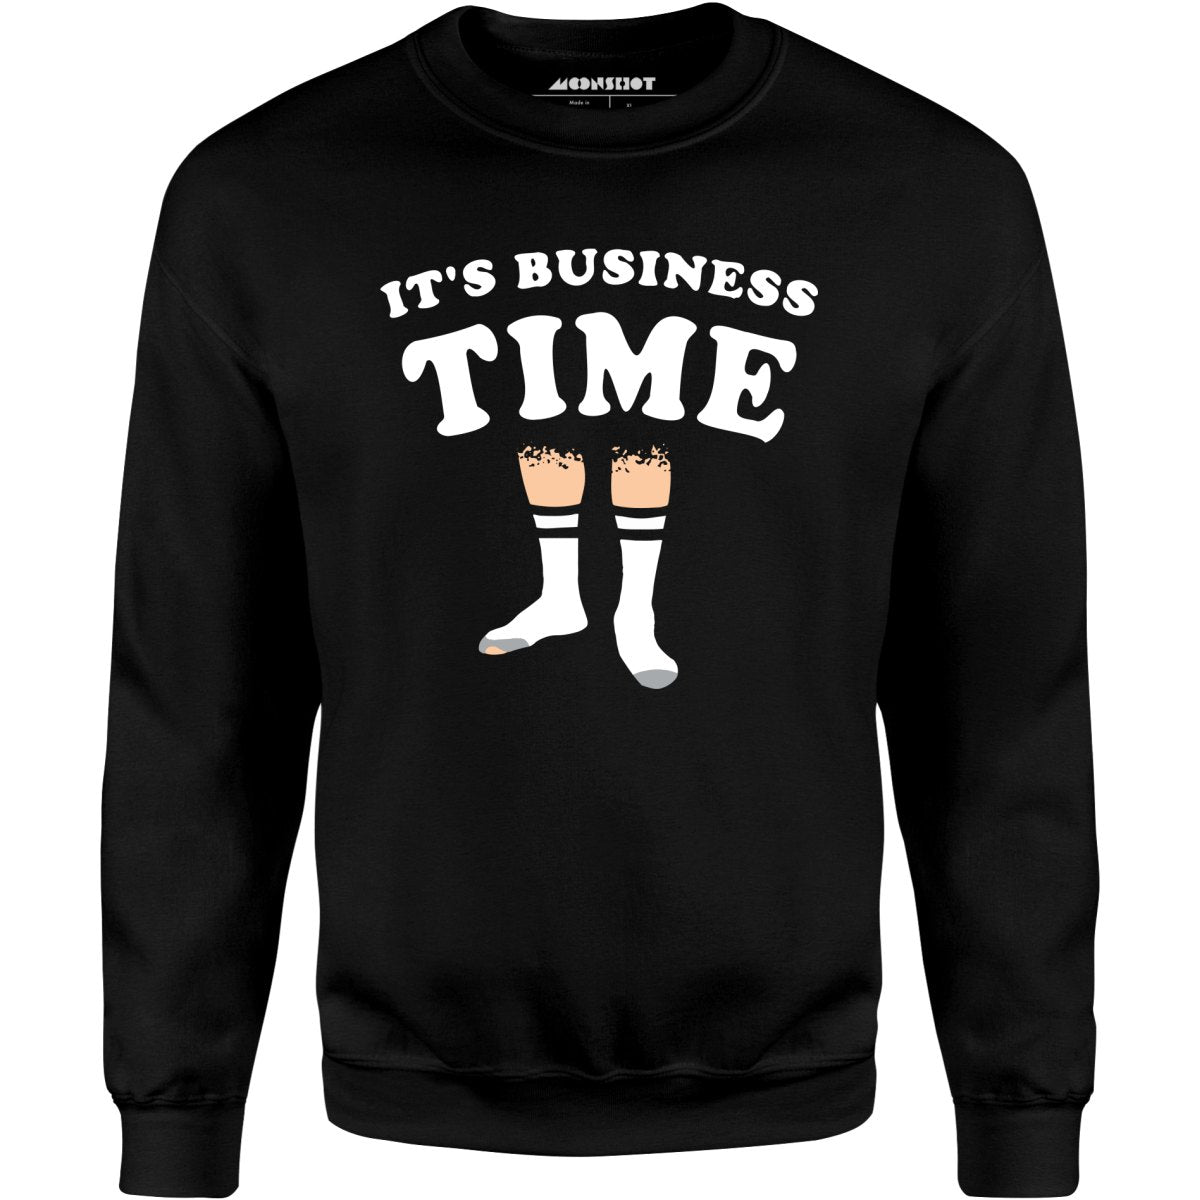 It's Business Time - Unisex Sweatshirt